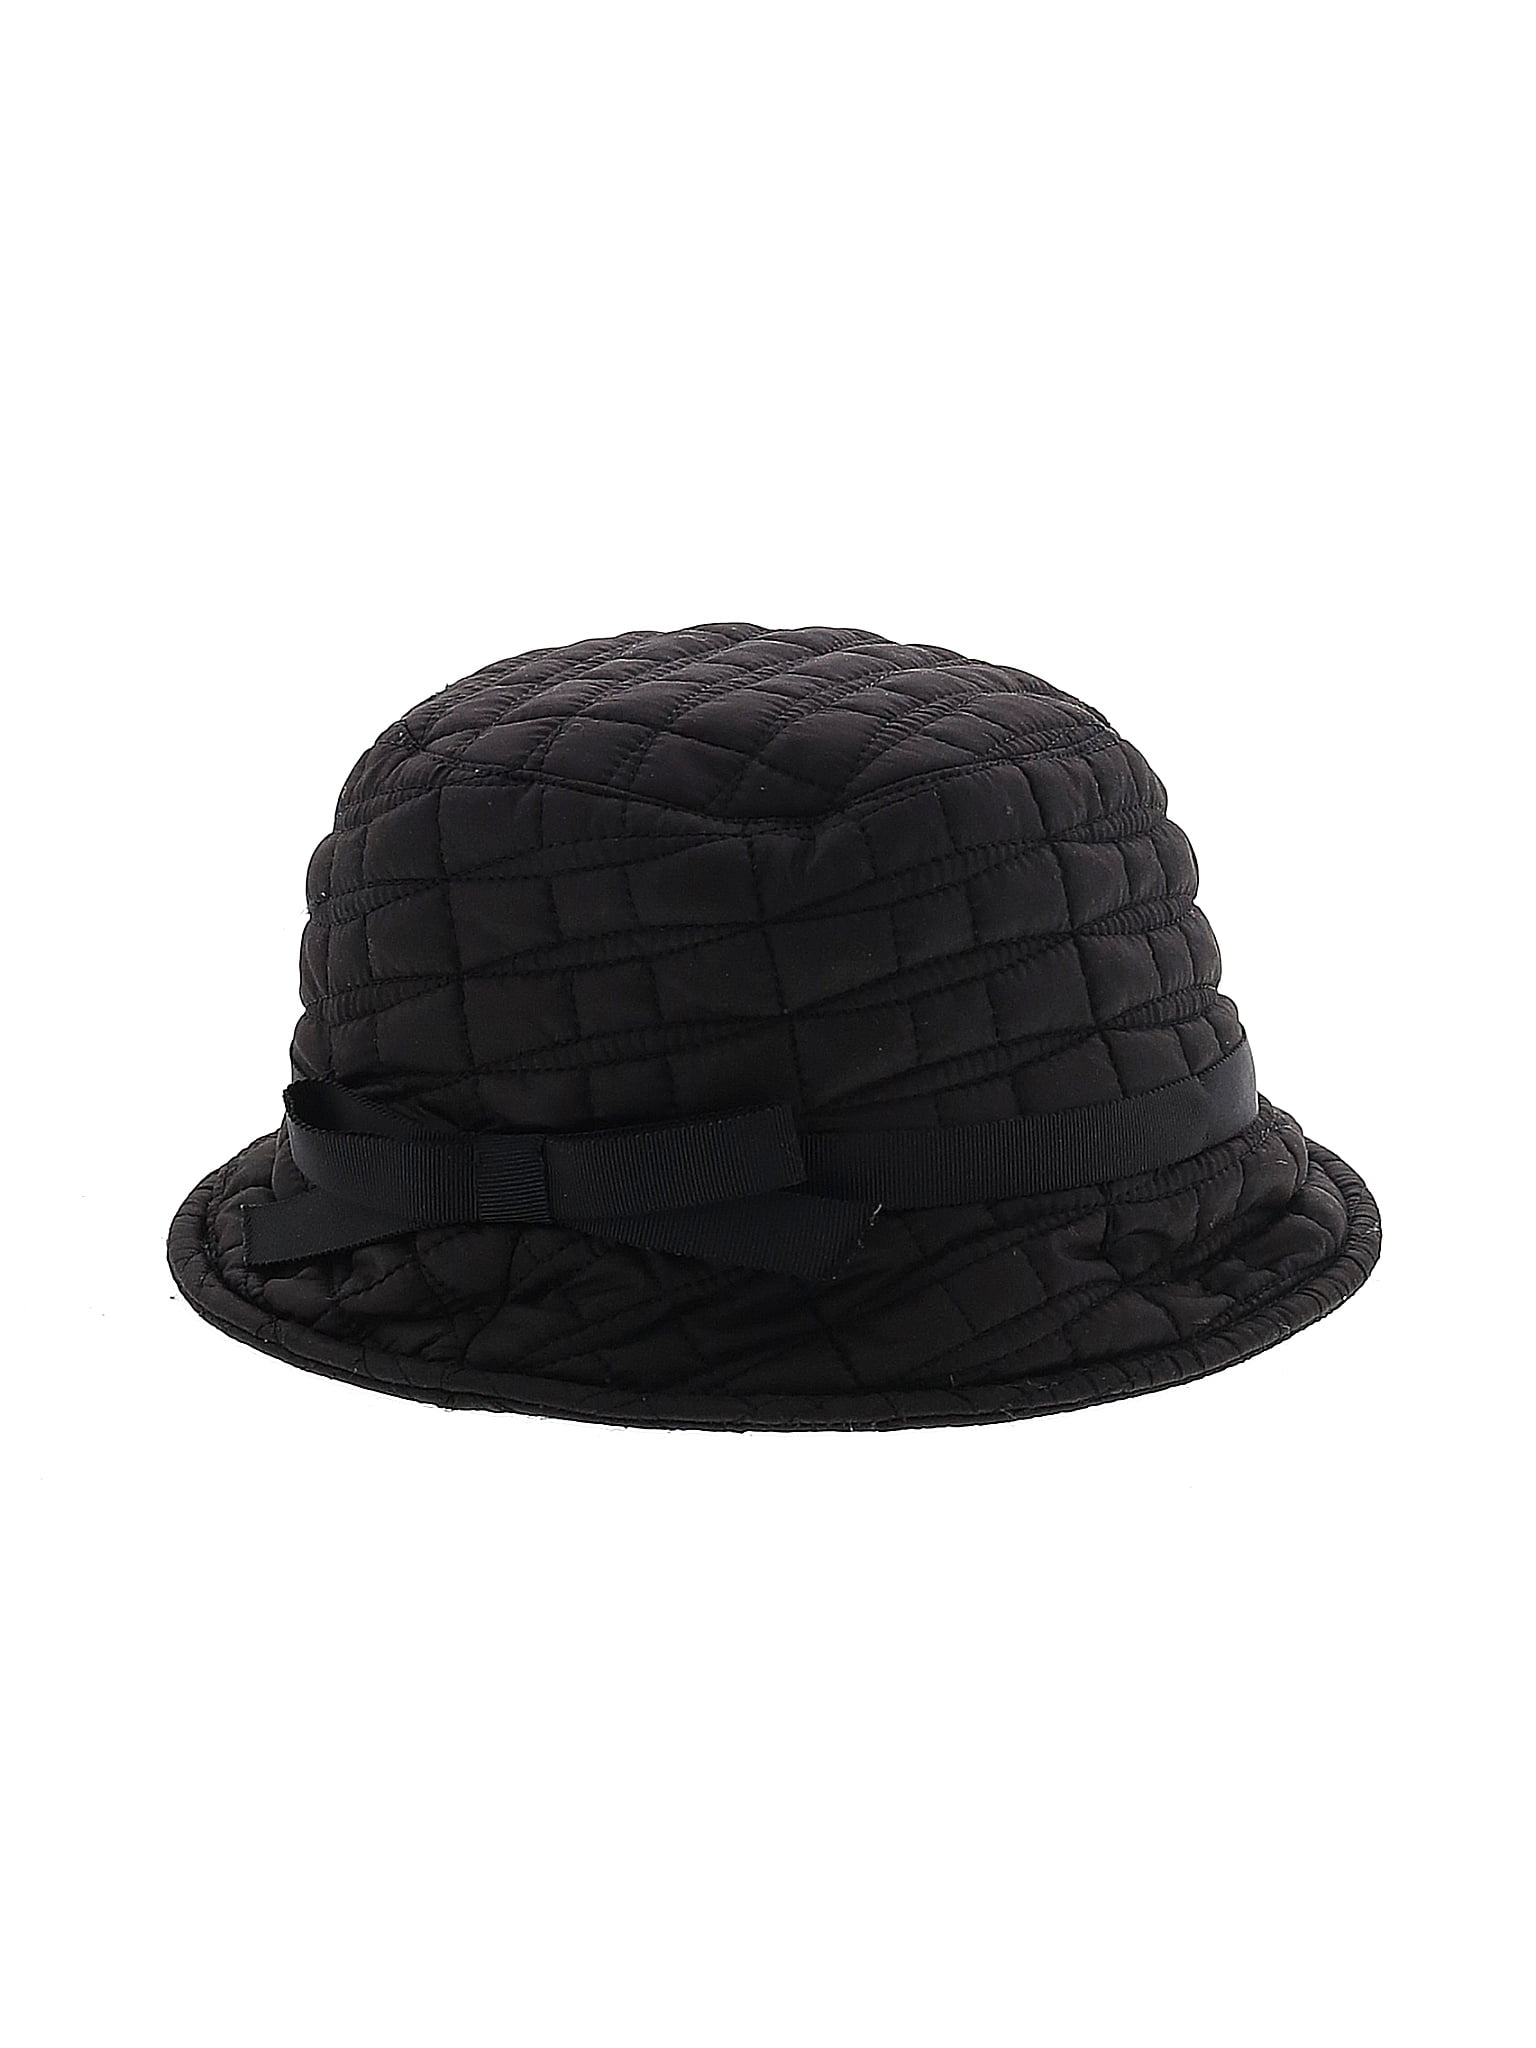 Kate Spade New York Solid Black Hat One Size - 68% off | thredUP